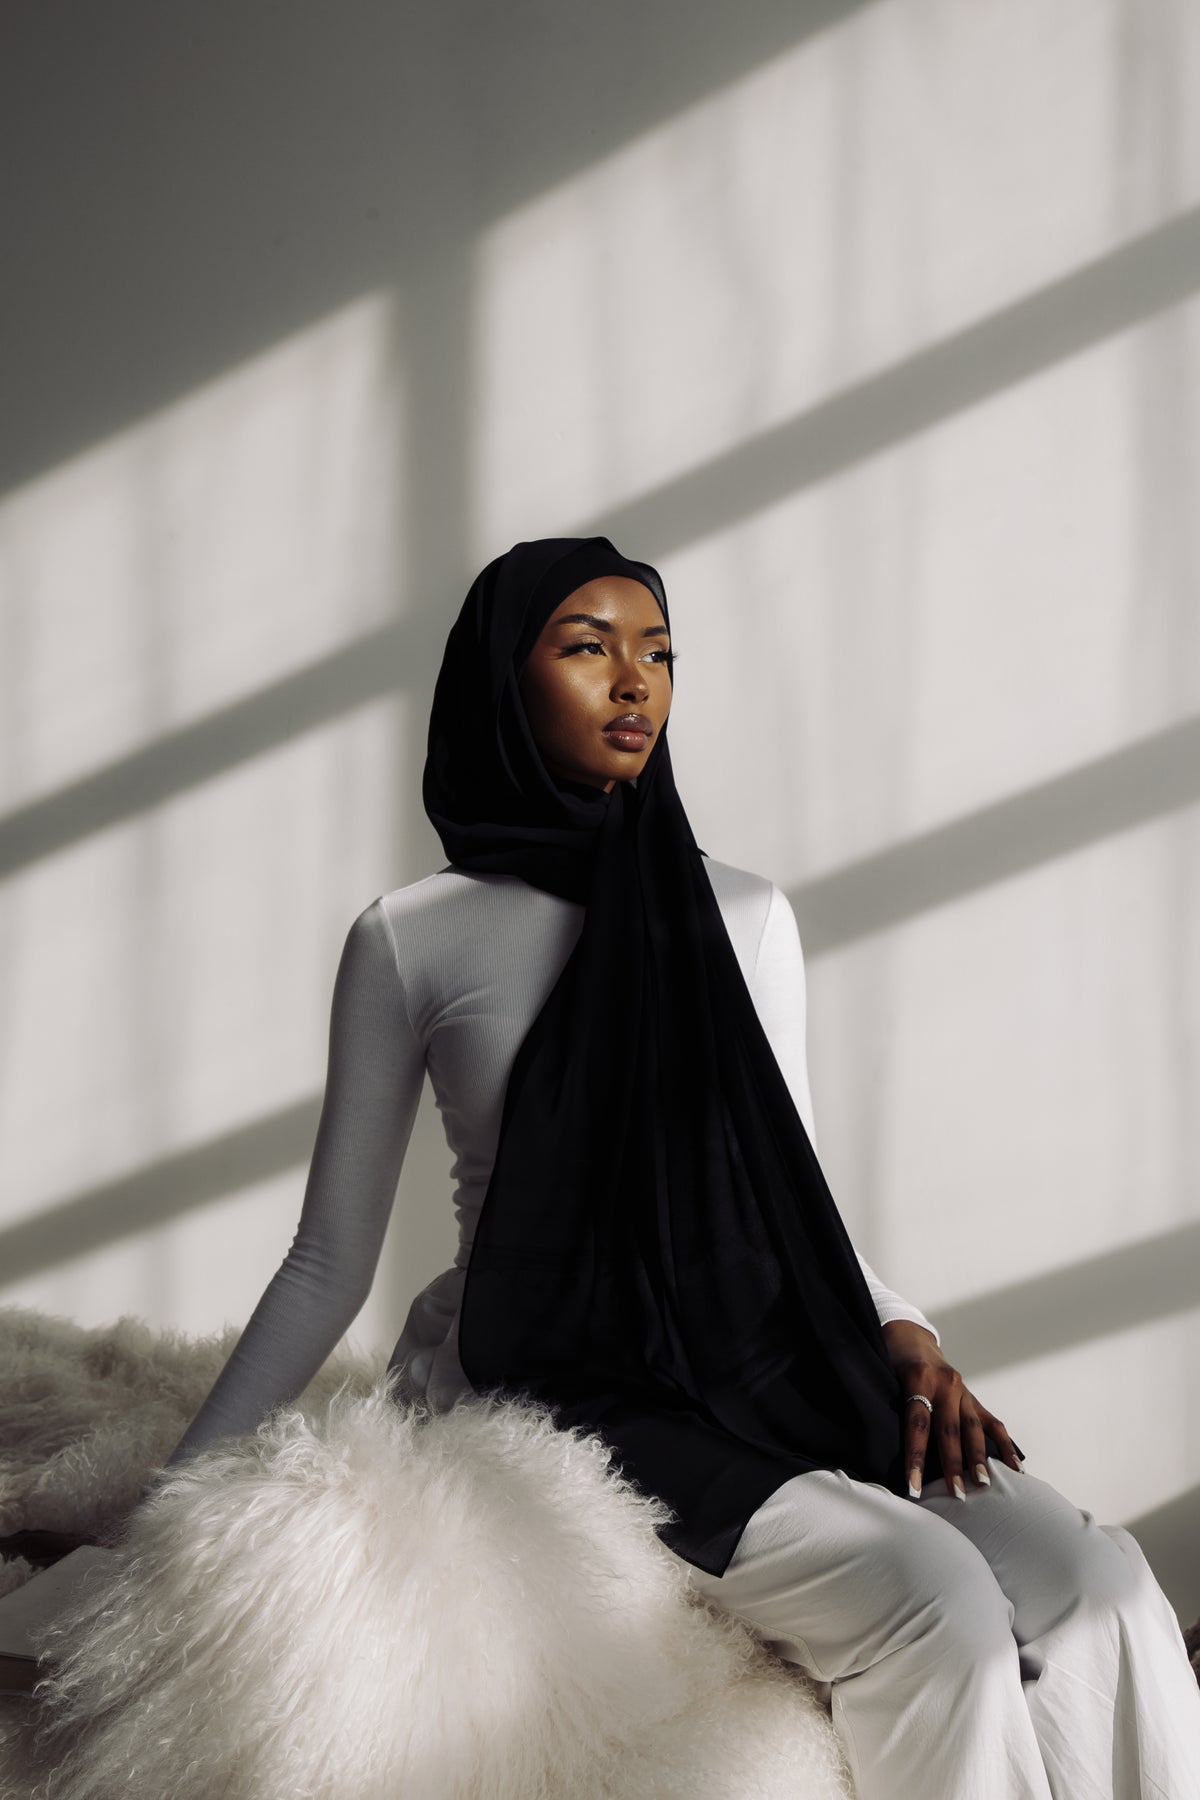 Matching Hijab & Undercap Set - Obsidian